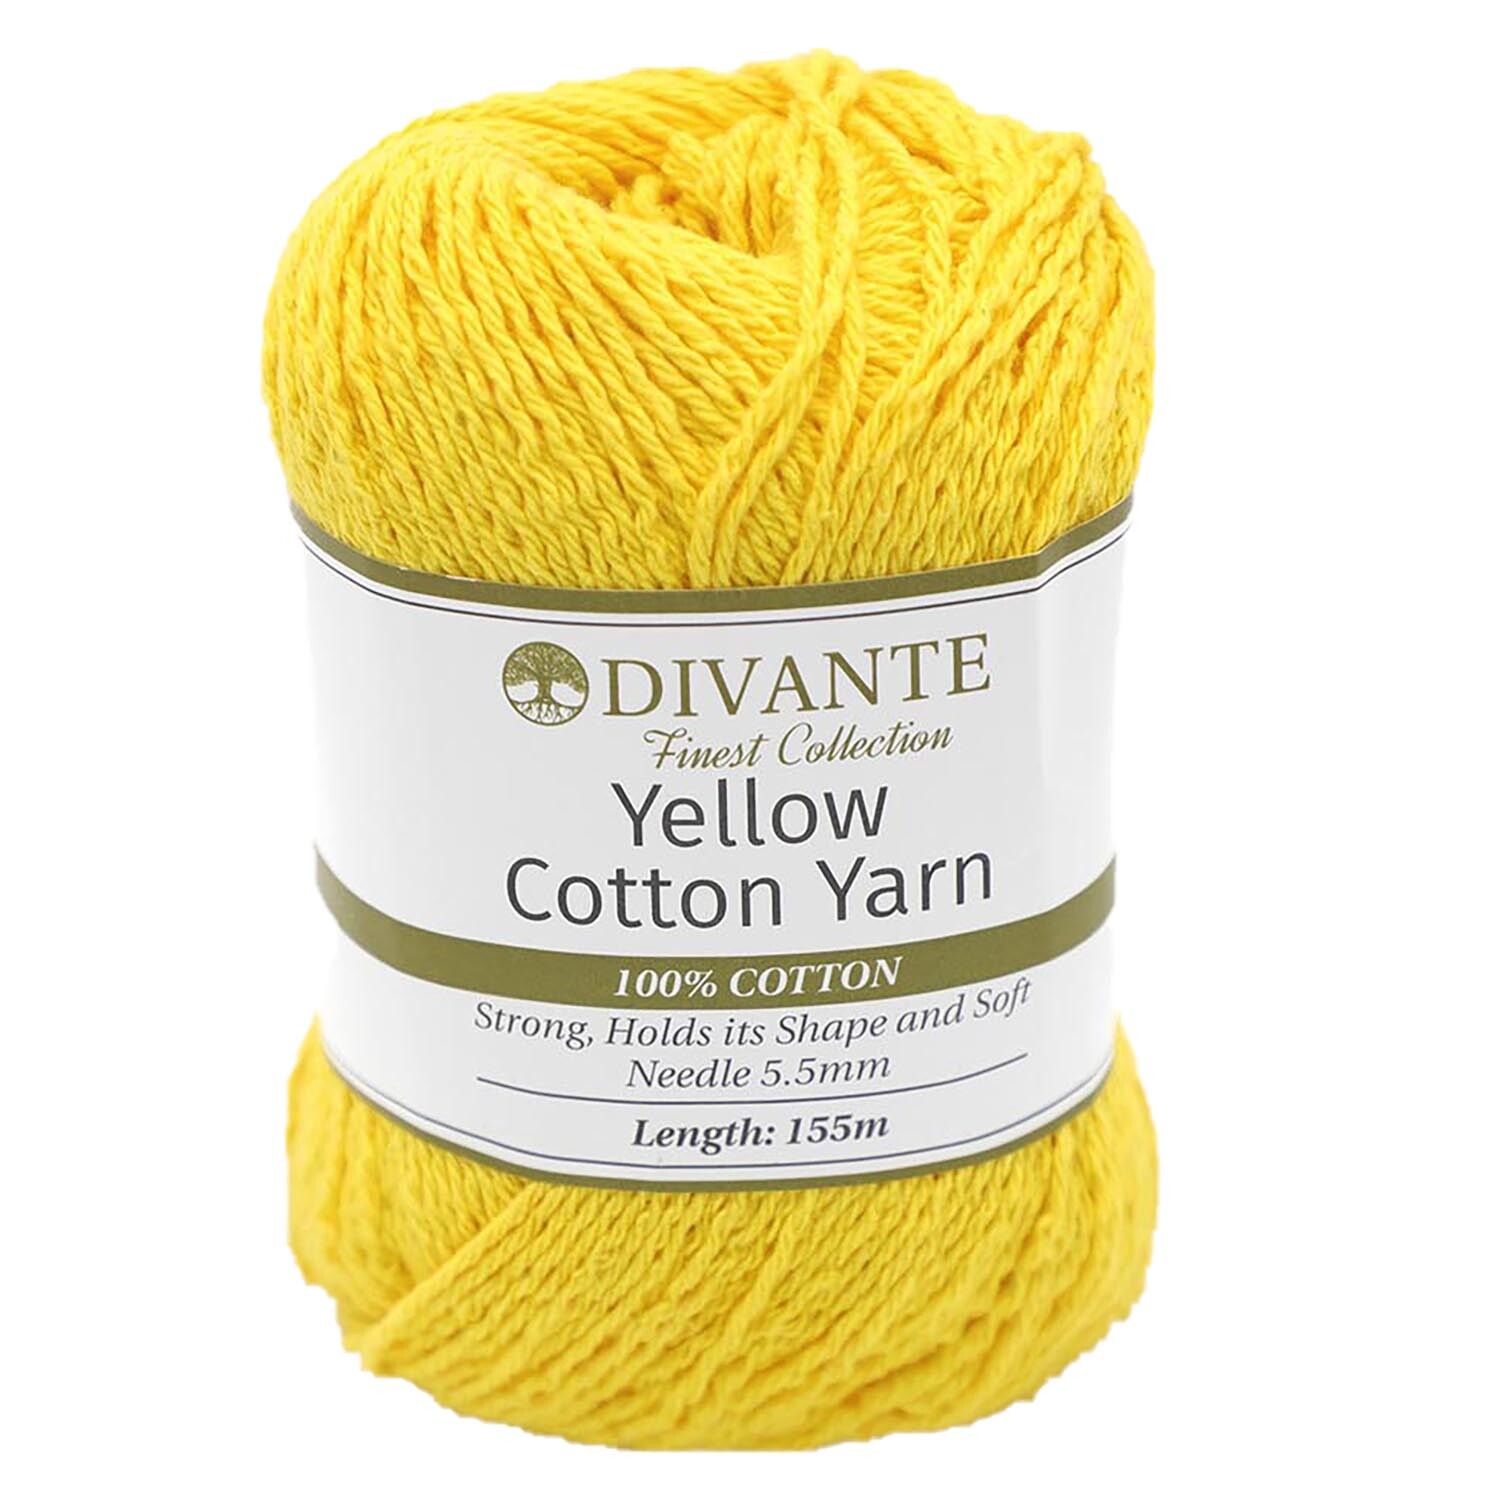 Divante Yellow Cotton Yarn 100g Image